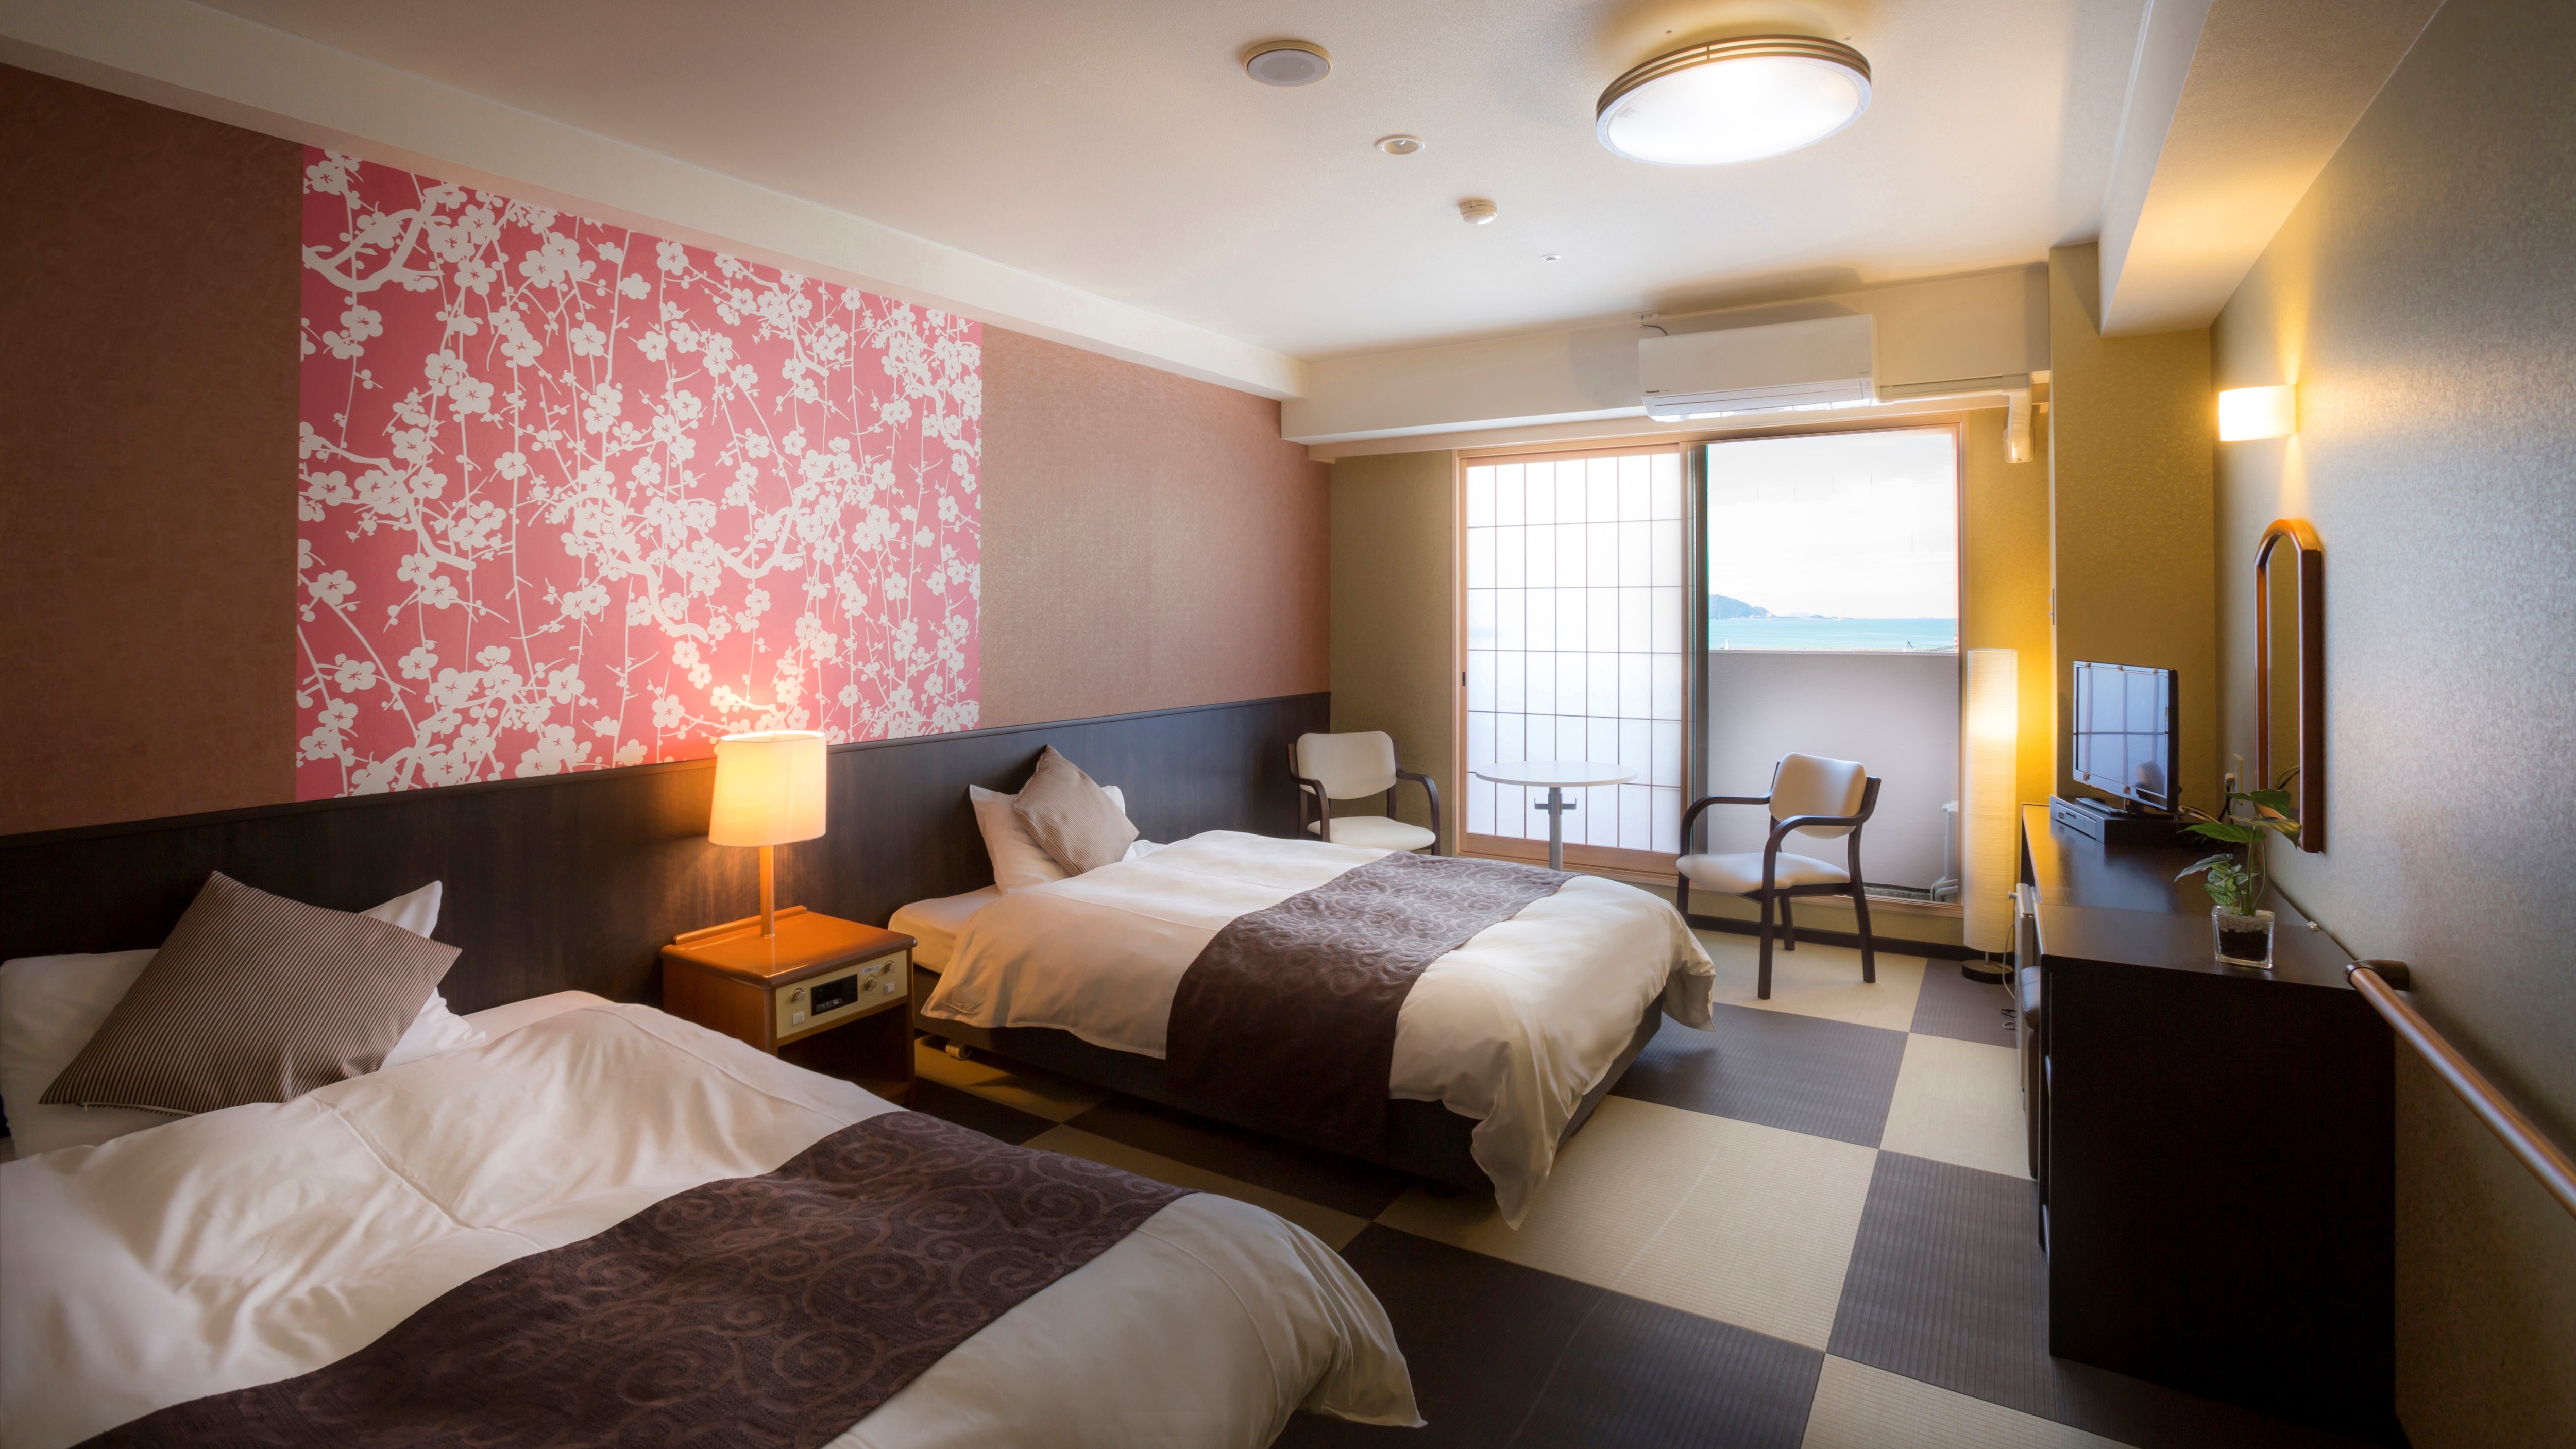 Renewal Japanese modern twin room example (plum)